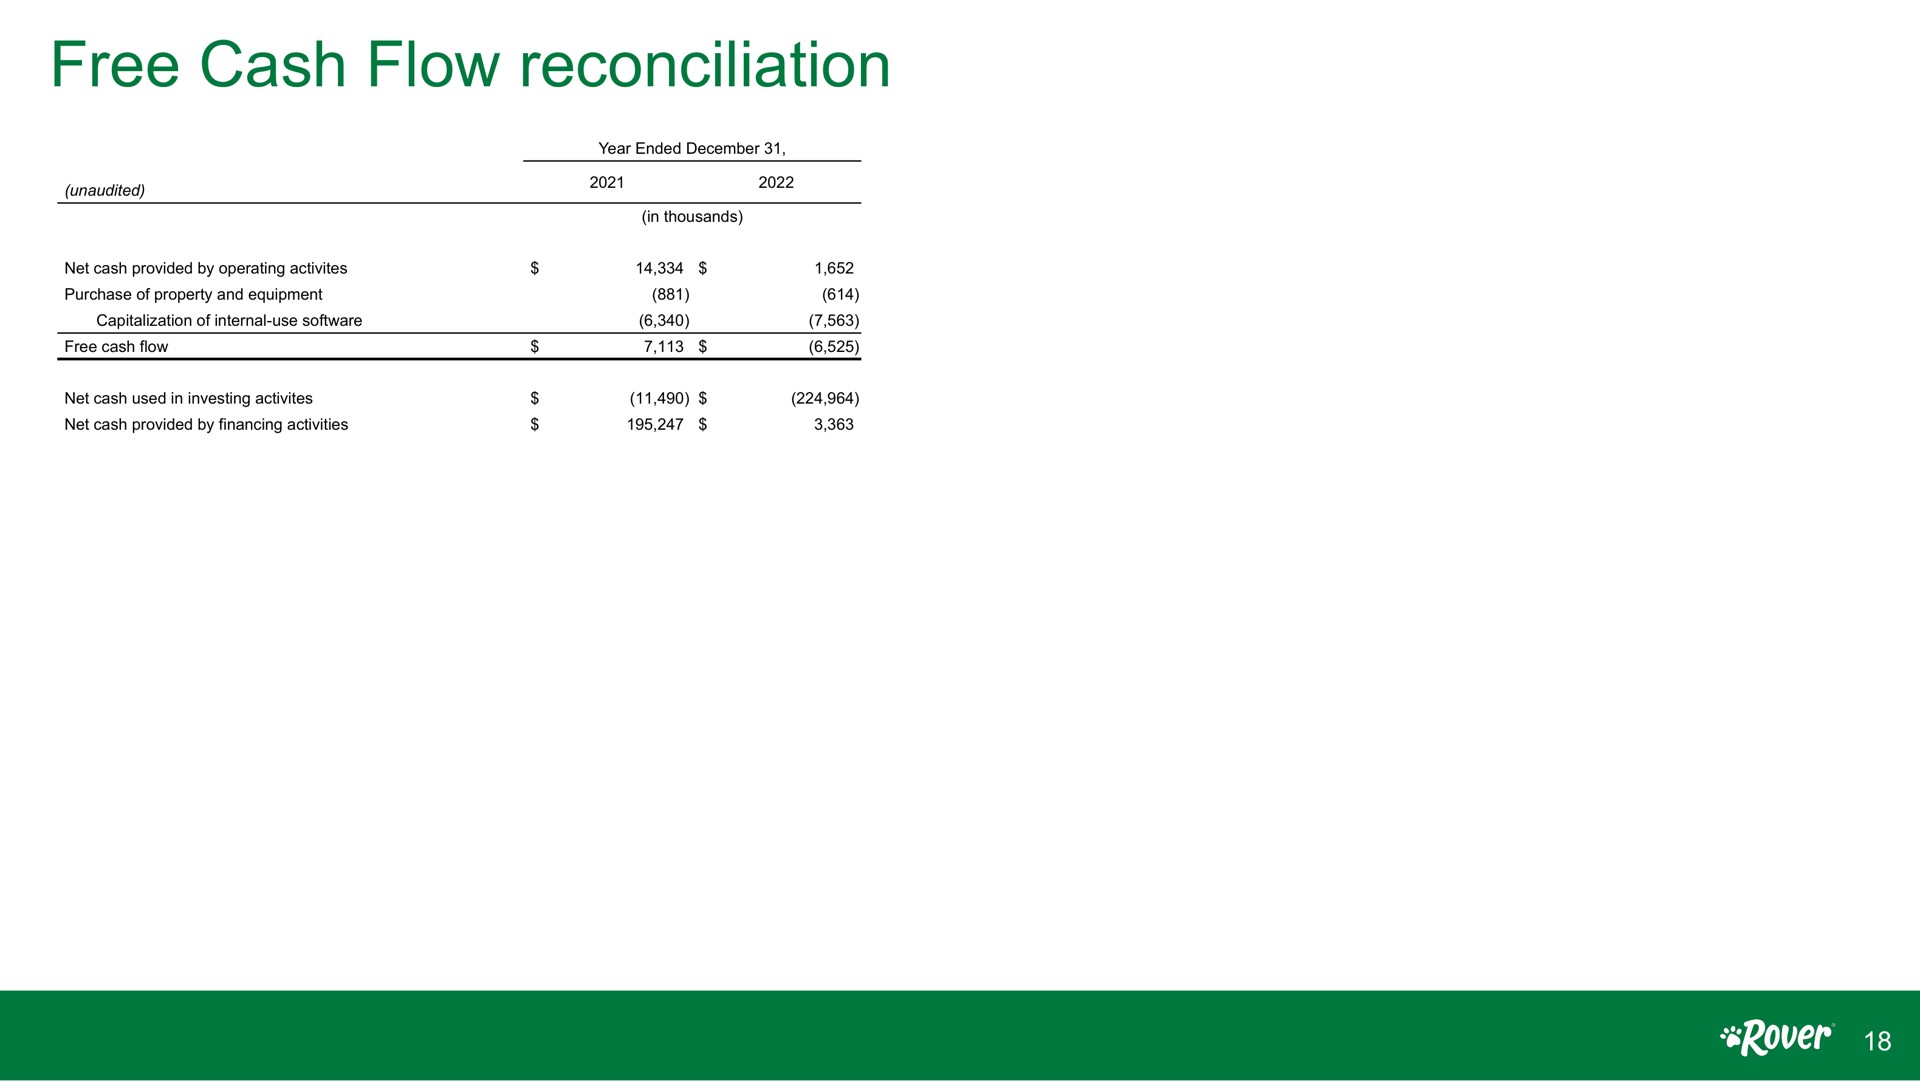 free cash flow reconciliation | Rover